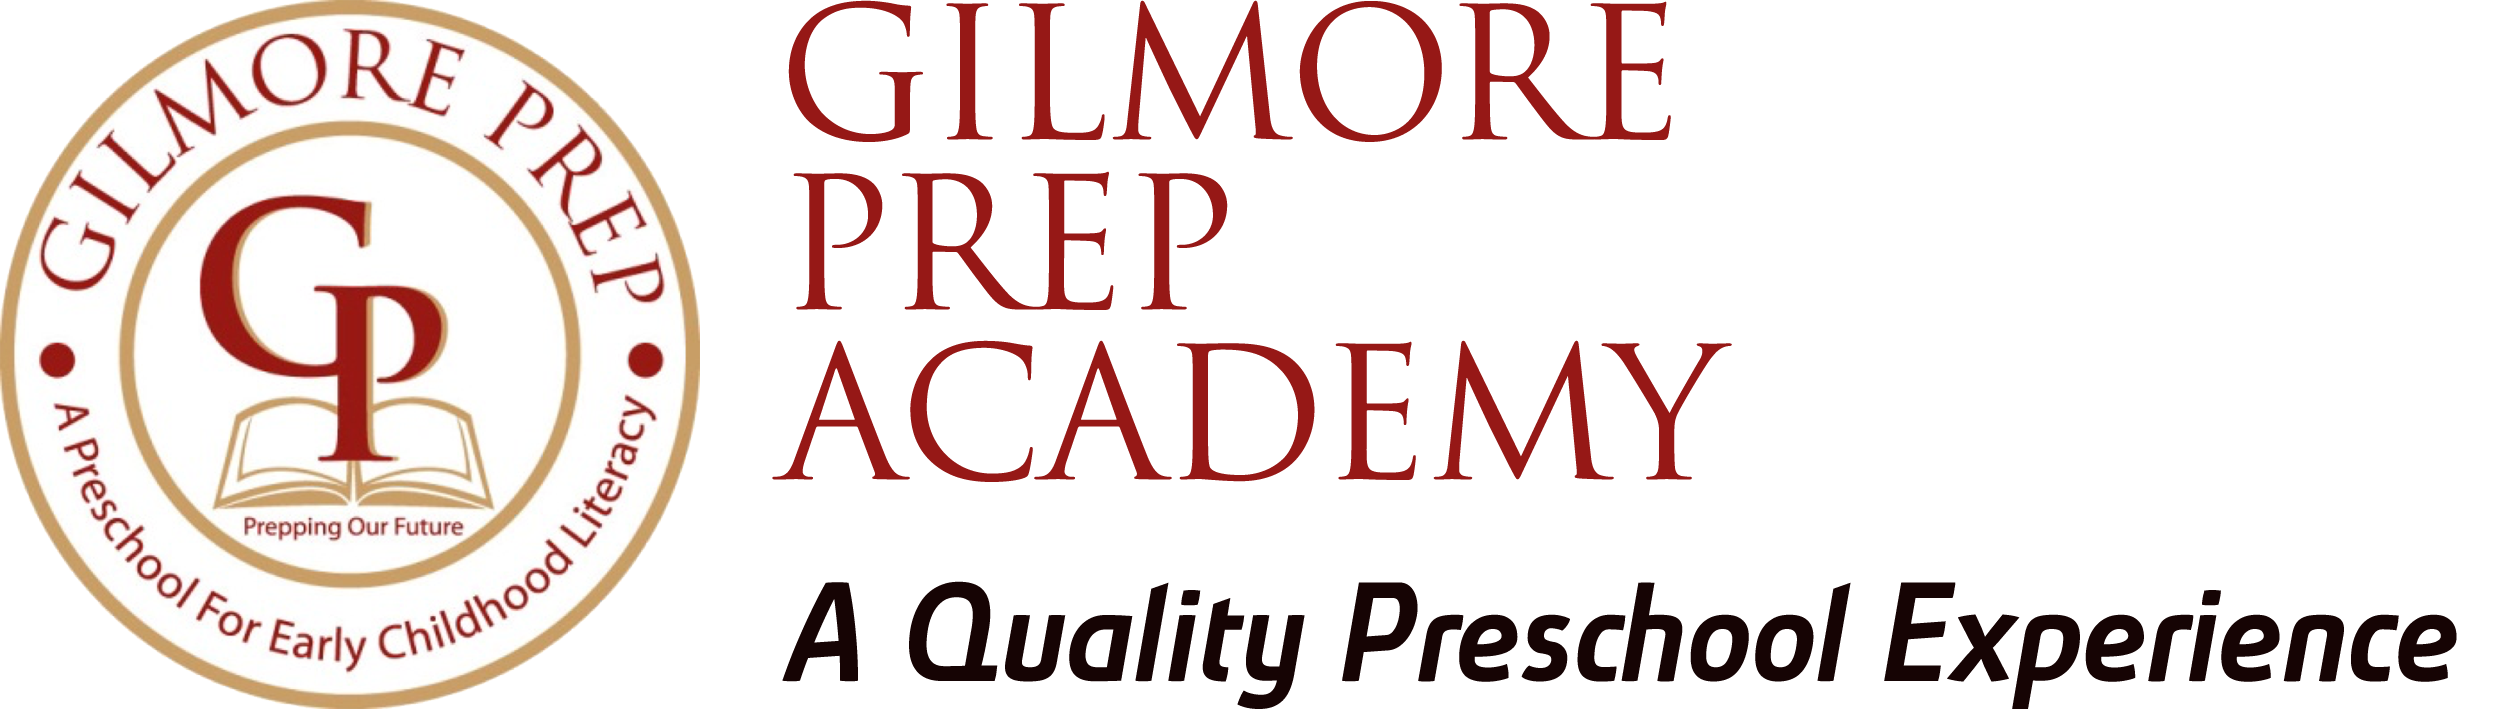 Gilmore Prep Academy